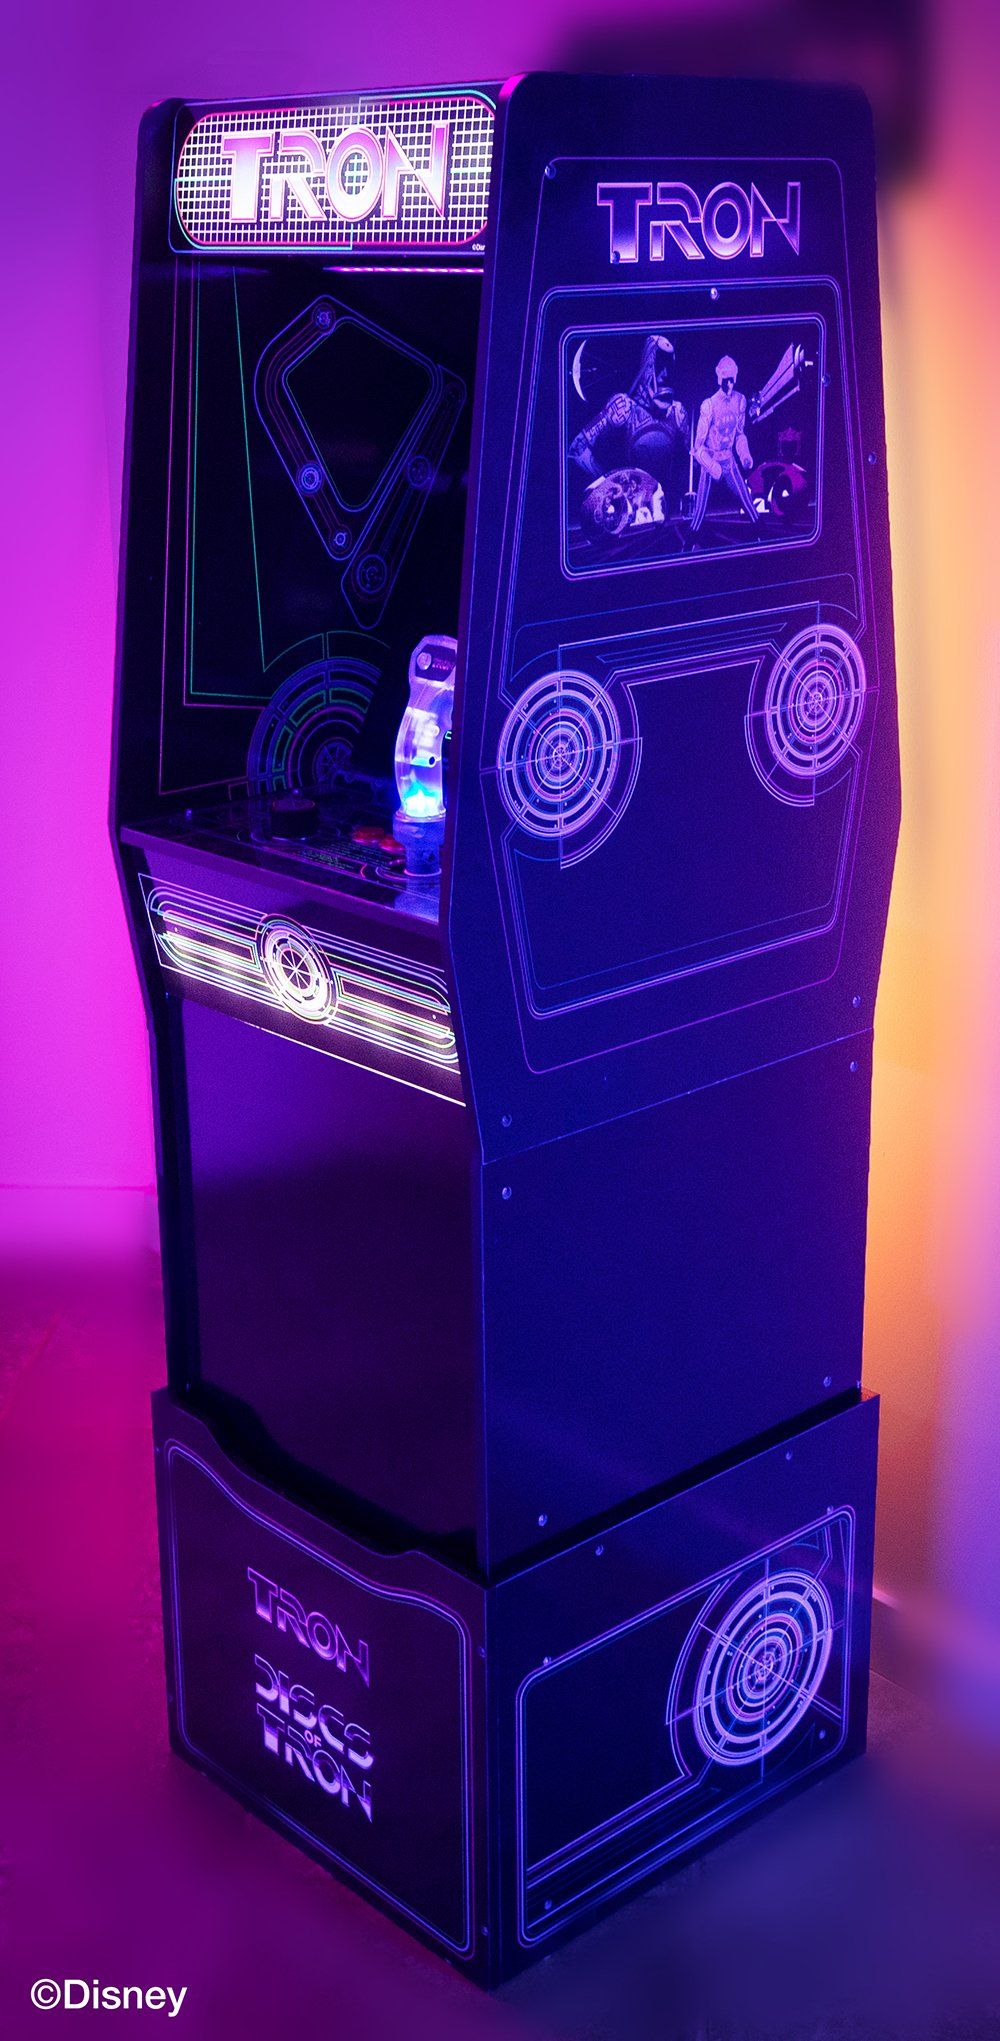 Tron Arcade1Up Machine Coming This Holiday Season